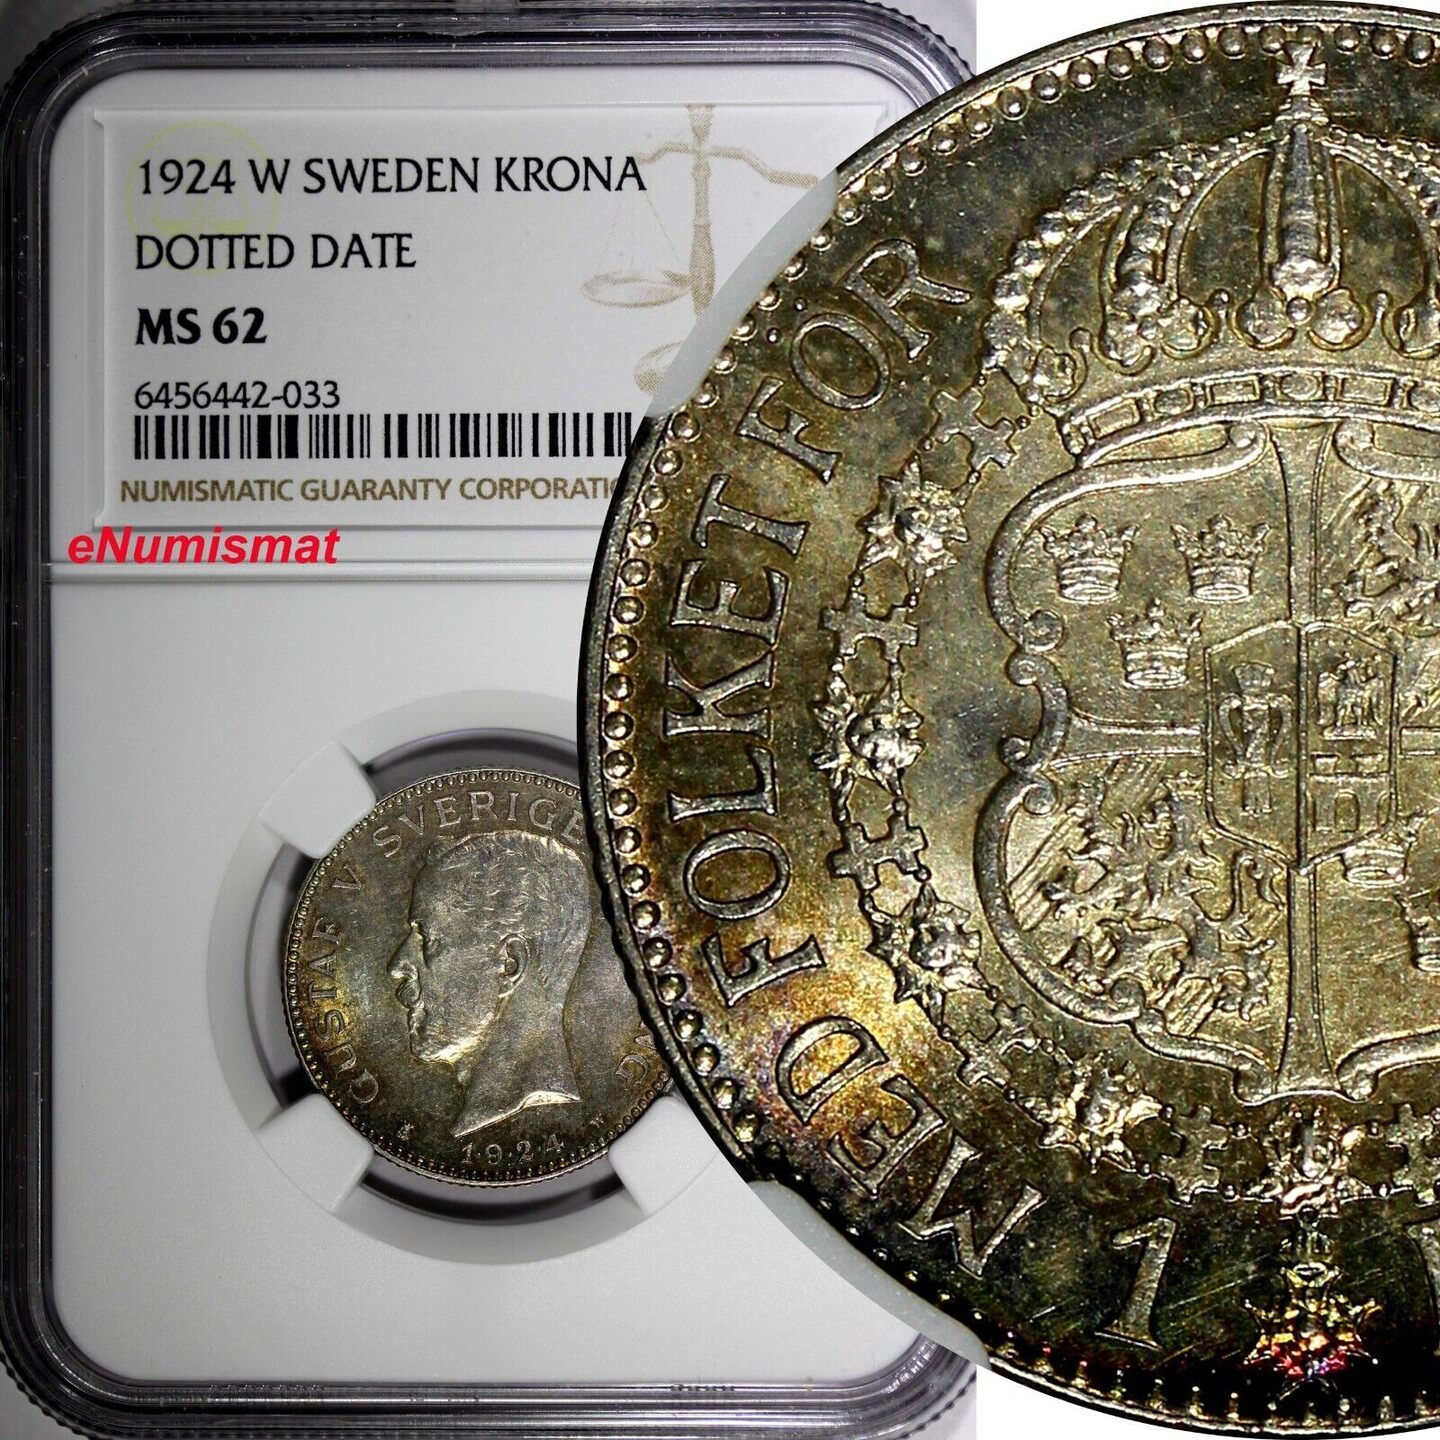 1 Krona Sweden Gustaf V Silver 1924 W Dotted Date Ngc Ms62 Toned Km 786 1 033 Ma Shops